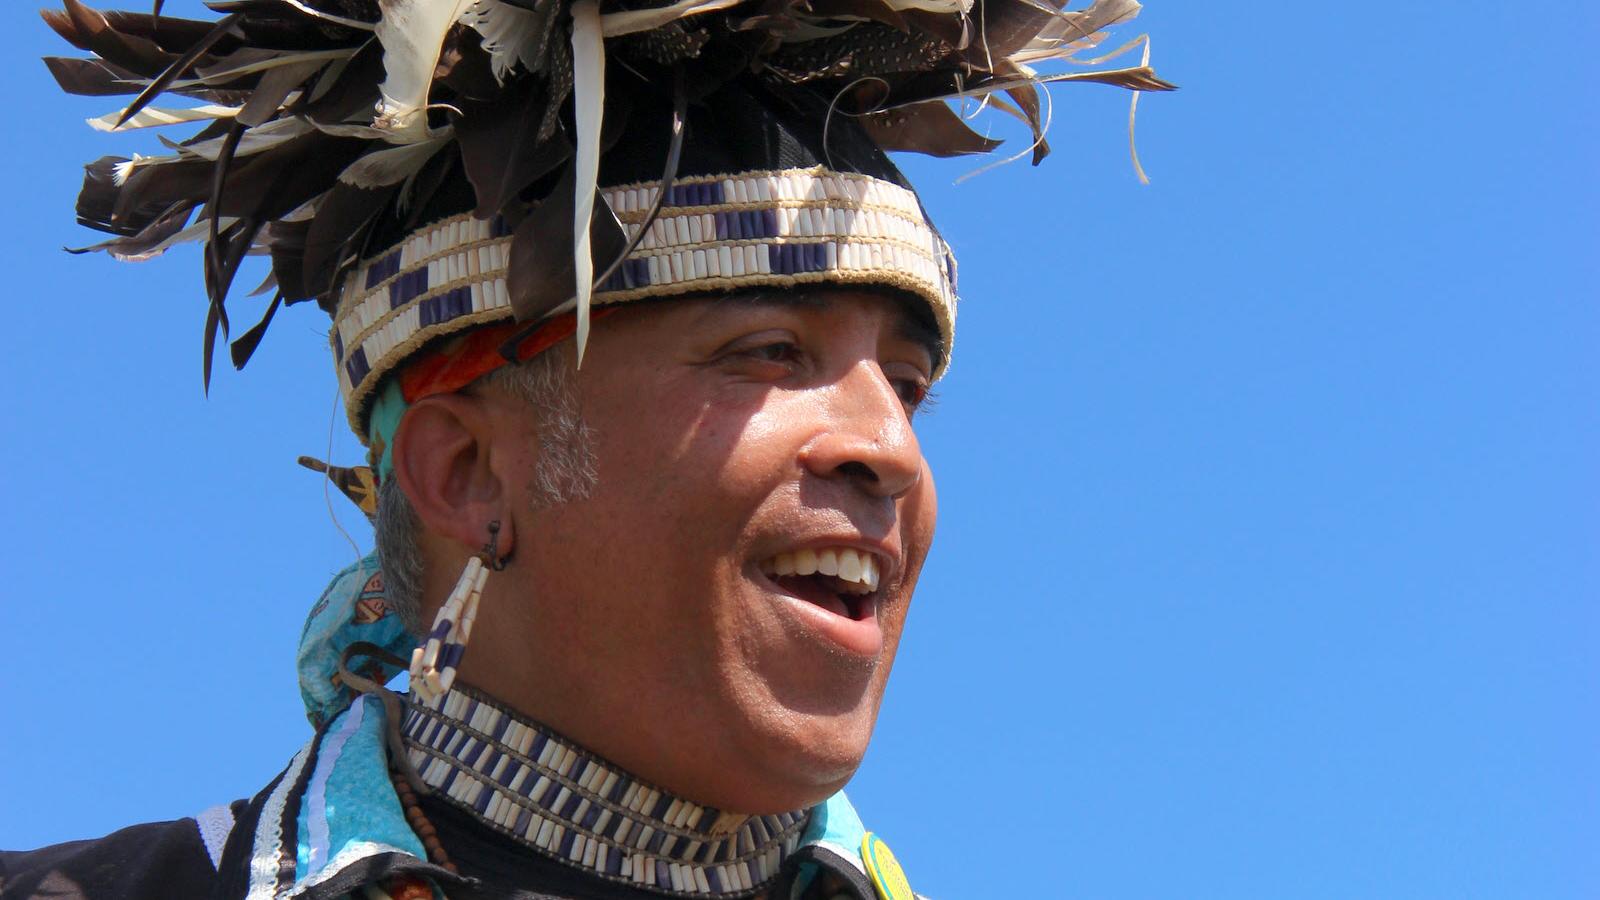 Senior technology specialist in headdress celebrates Native American Heritage Month